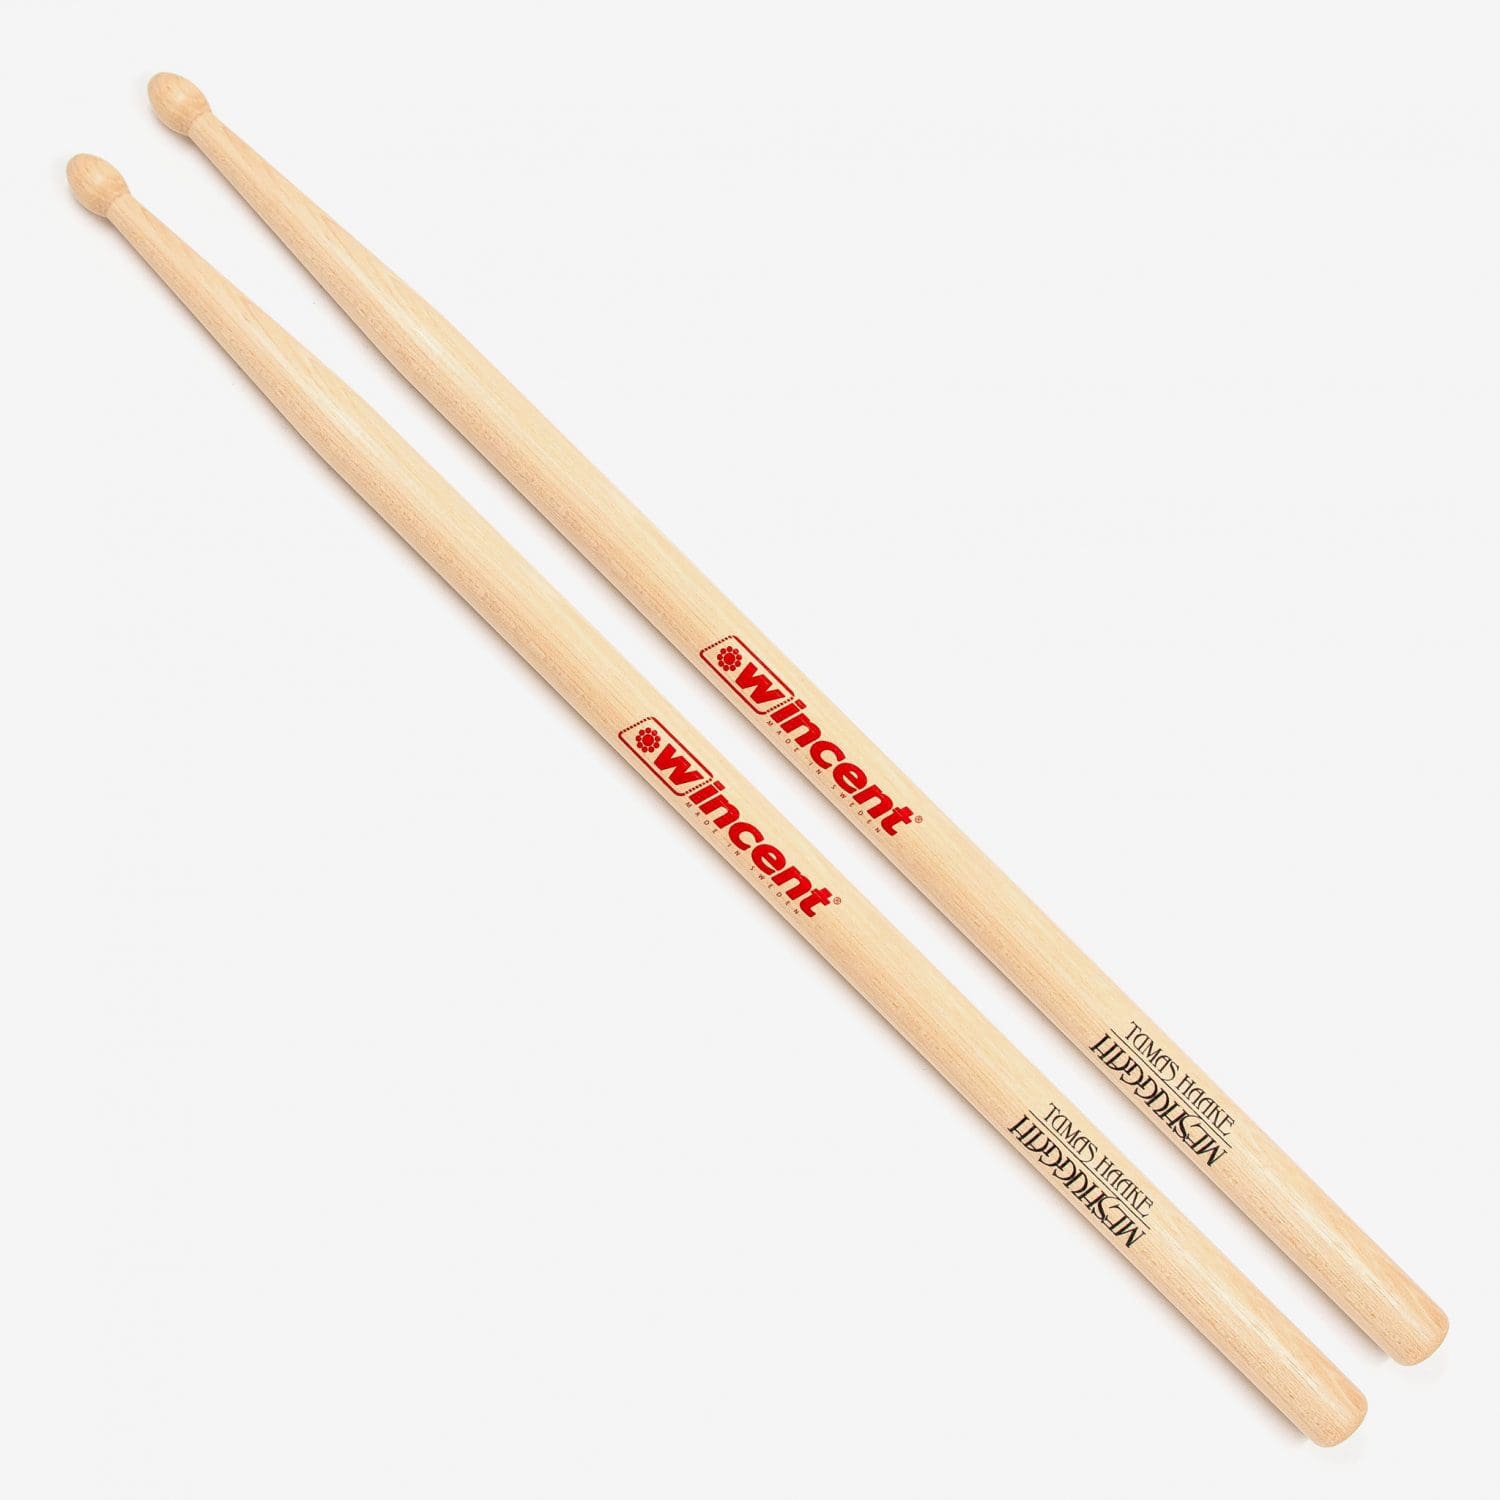 Tomas Haake Signature Drumsticks